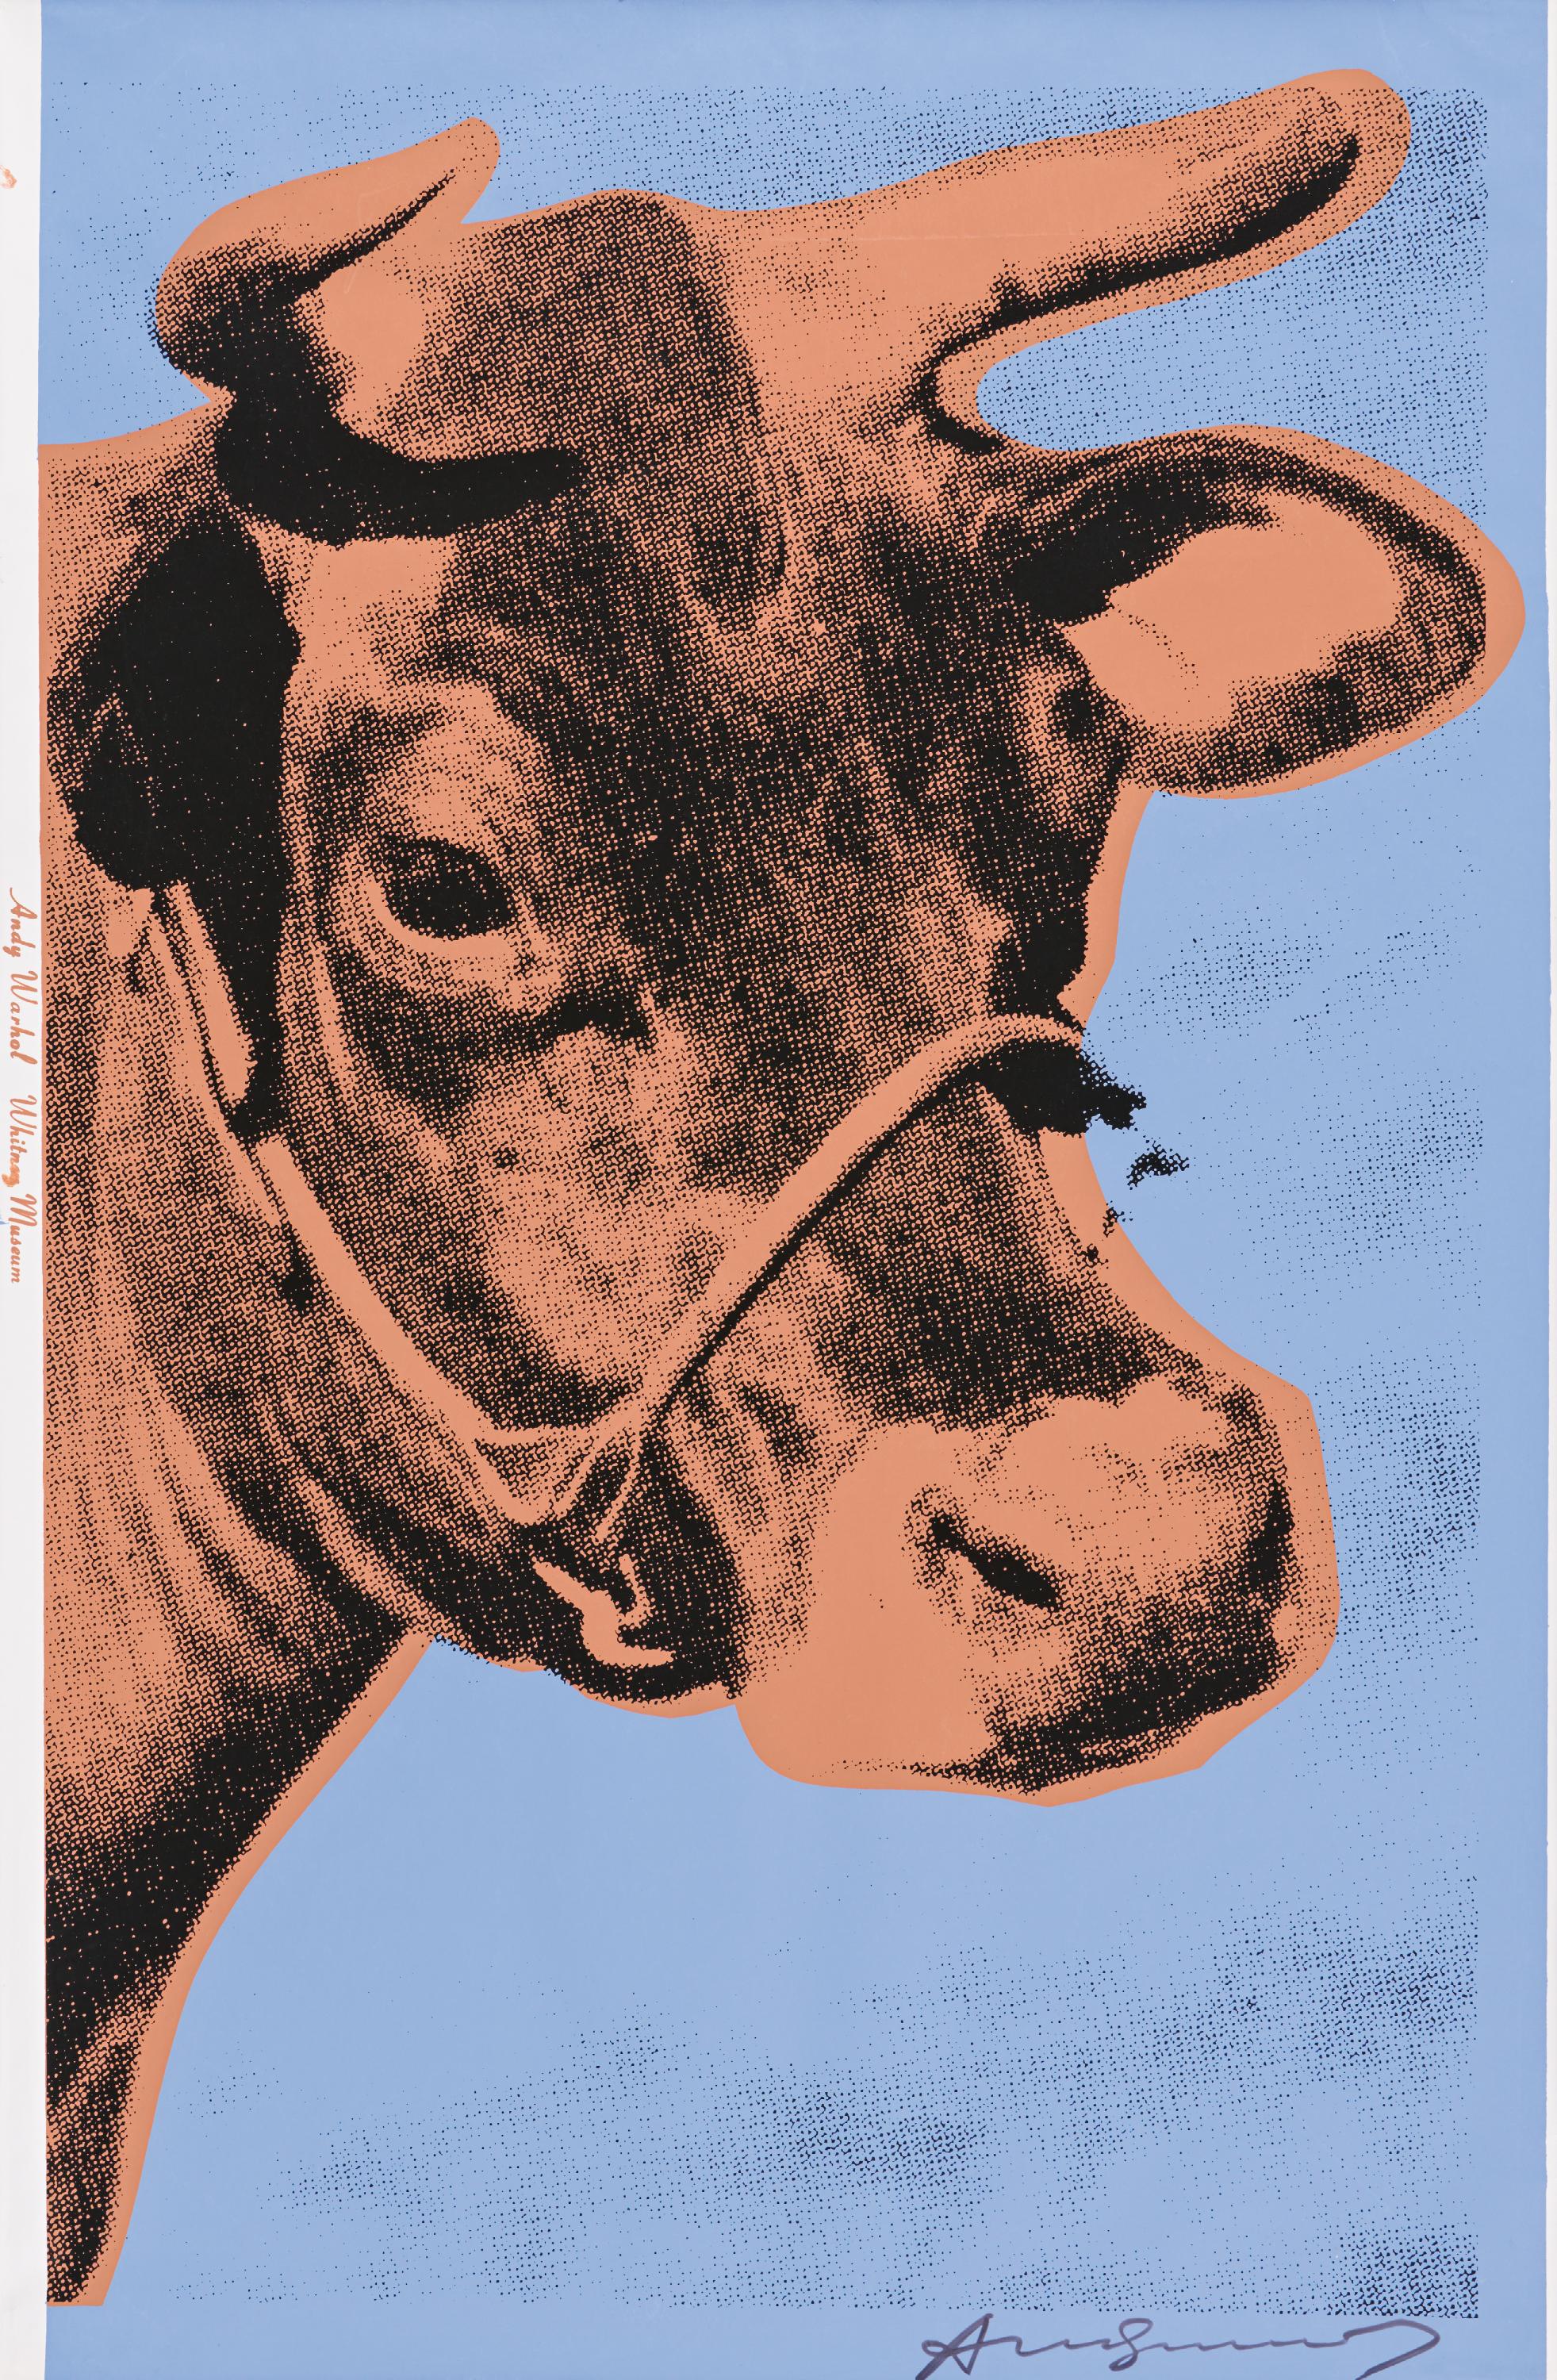 Andy Warhol: Cow